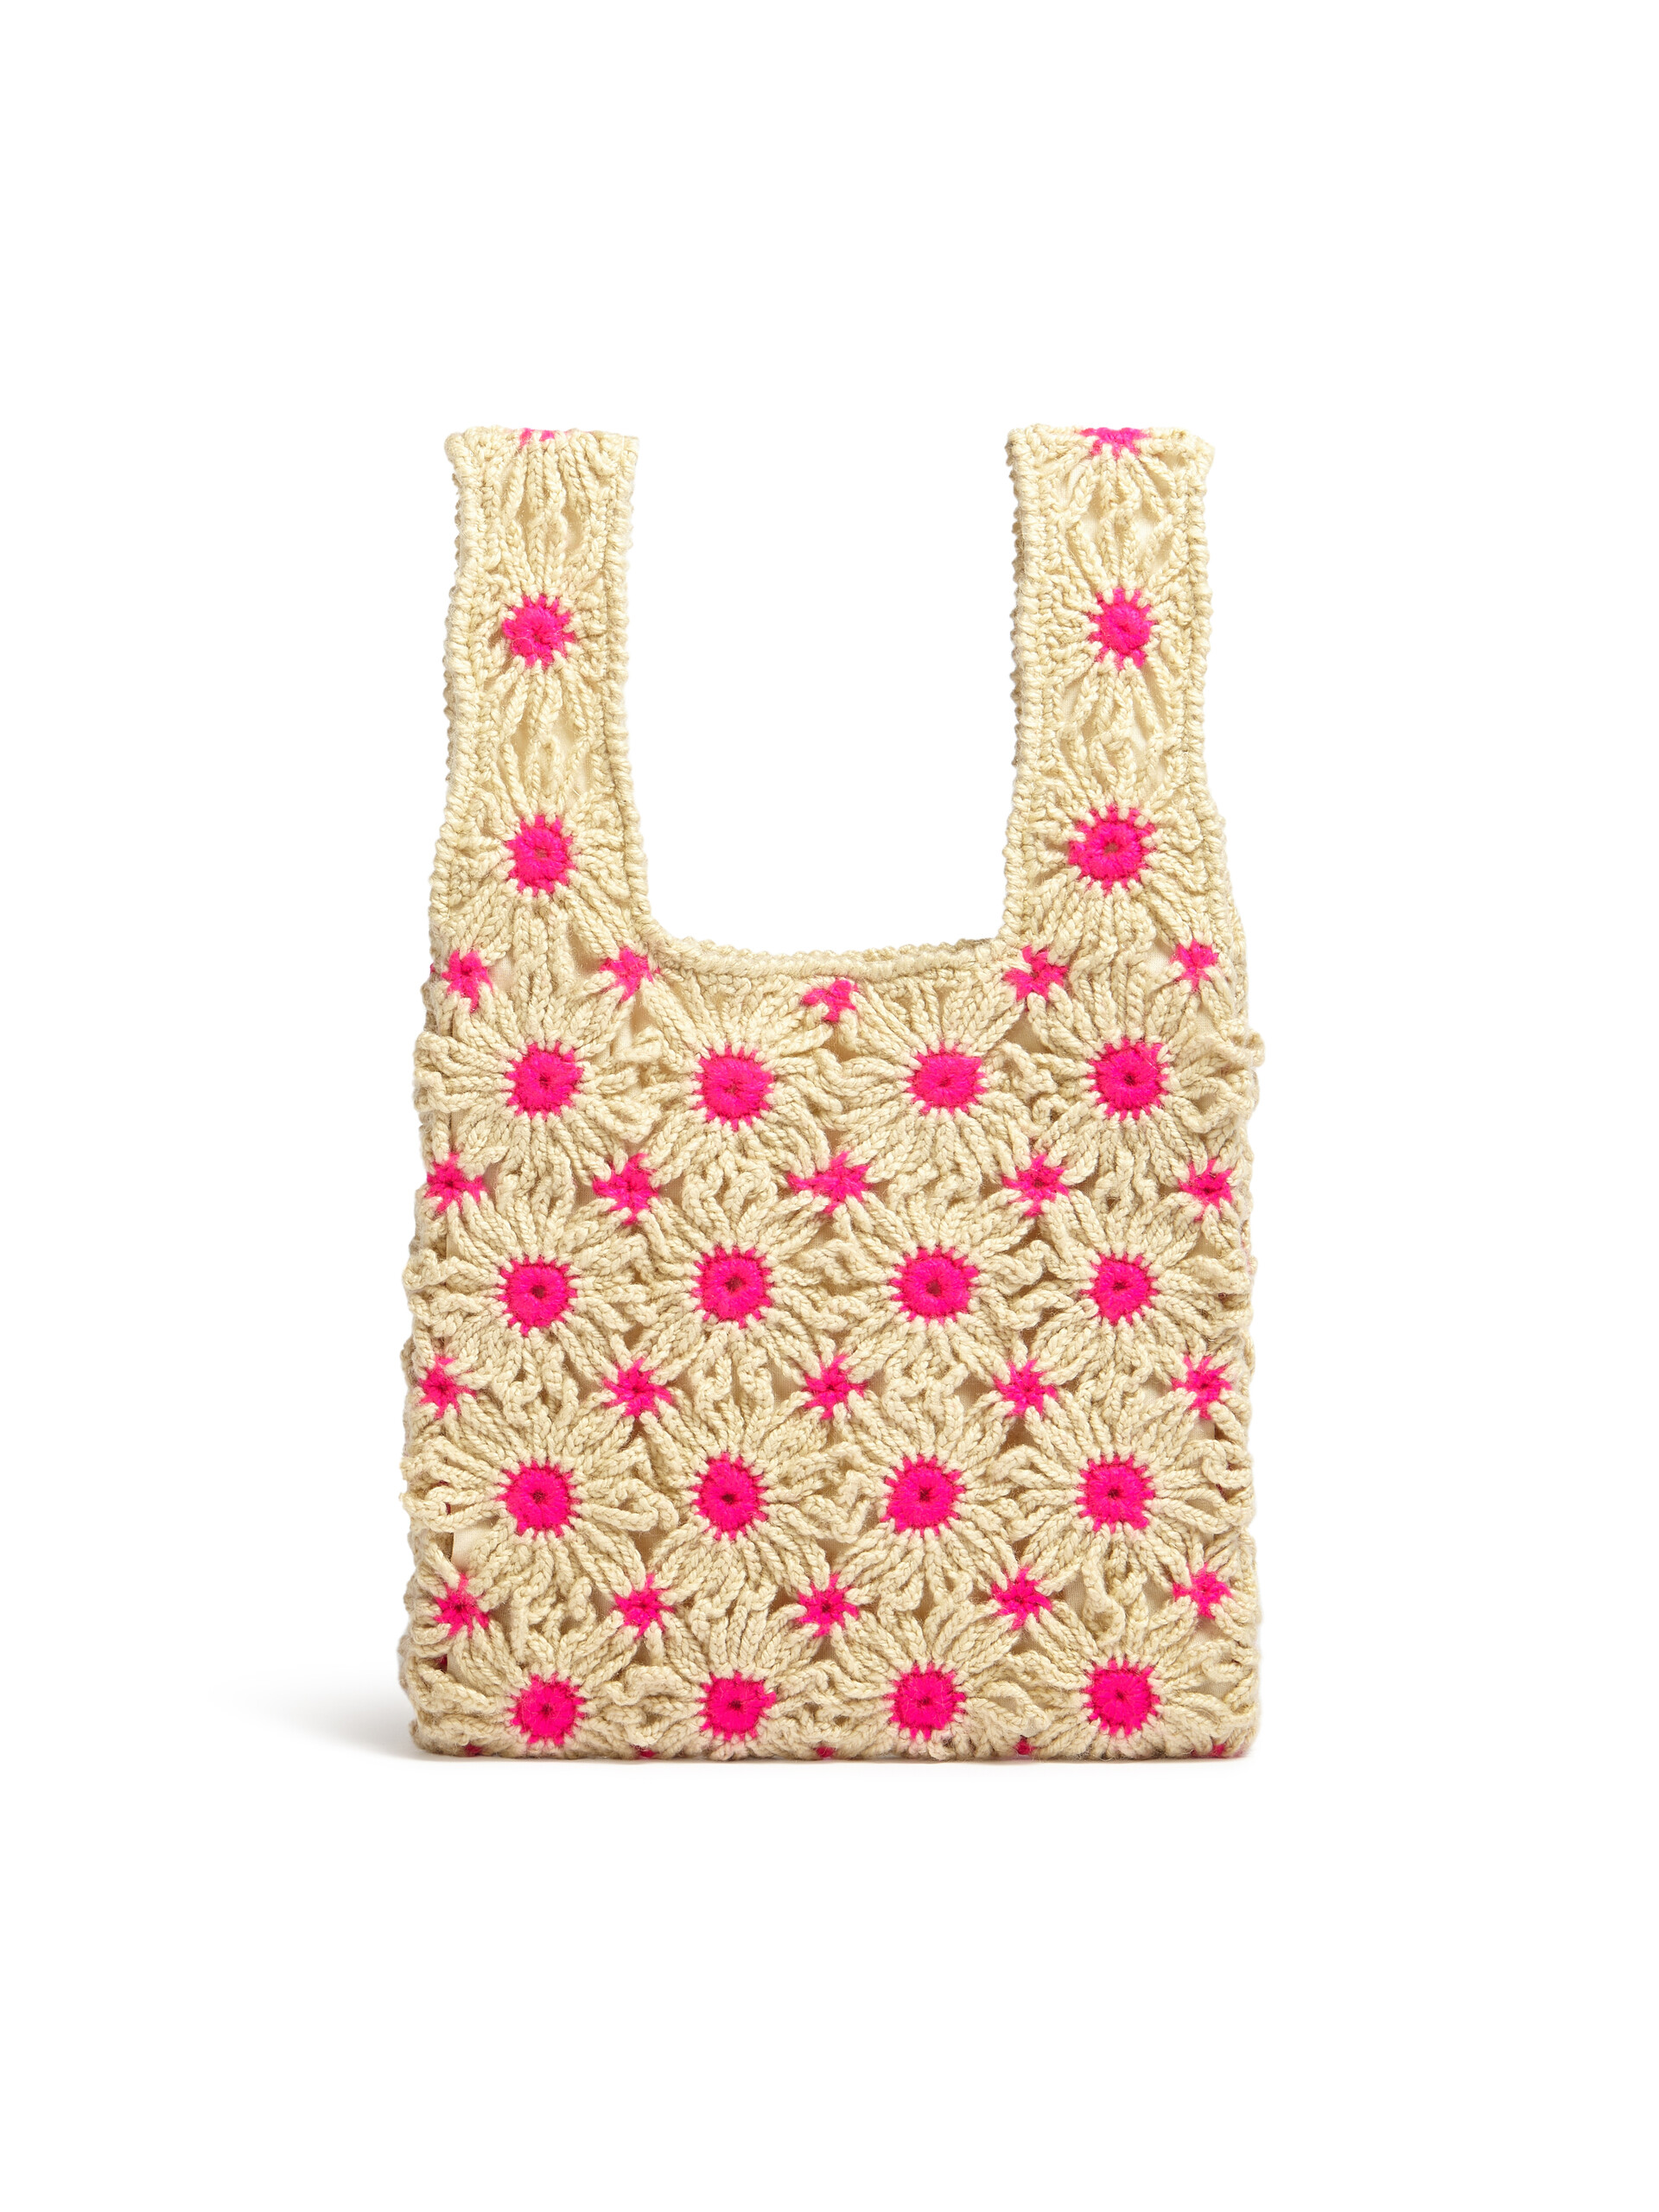 MARNI MARKET FISH bag in pink crochet - Bags - Image 3